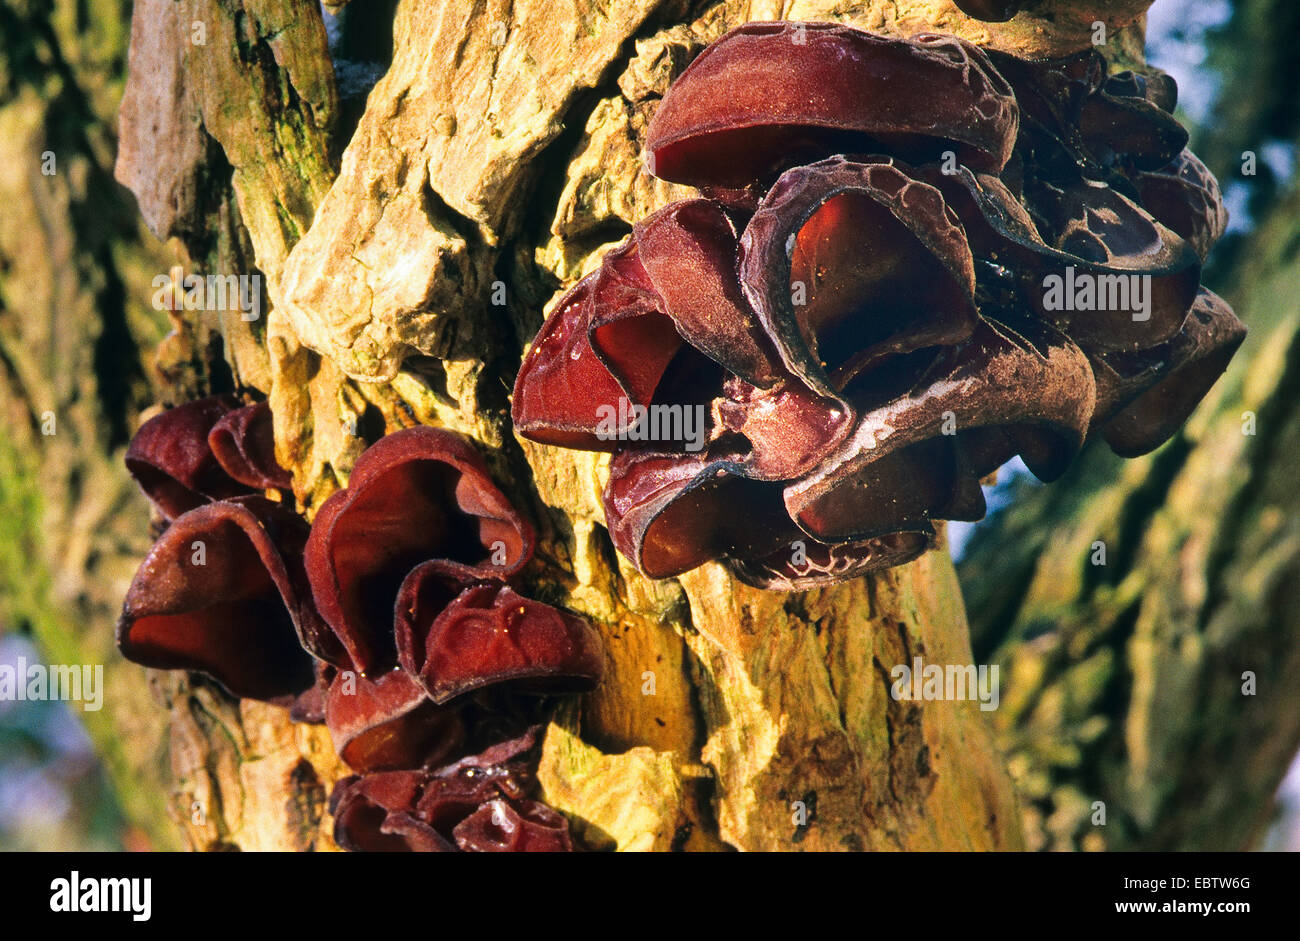 Jelly ear (Auricularia auricula-judae, Hirneola auricula-judae), fruiting bodies at an elderberry trunk, Germany Stock Photo